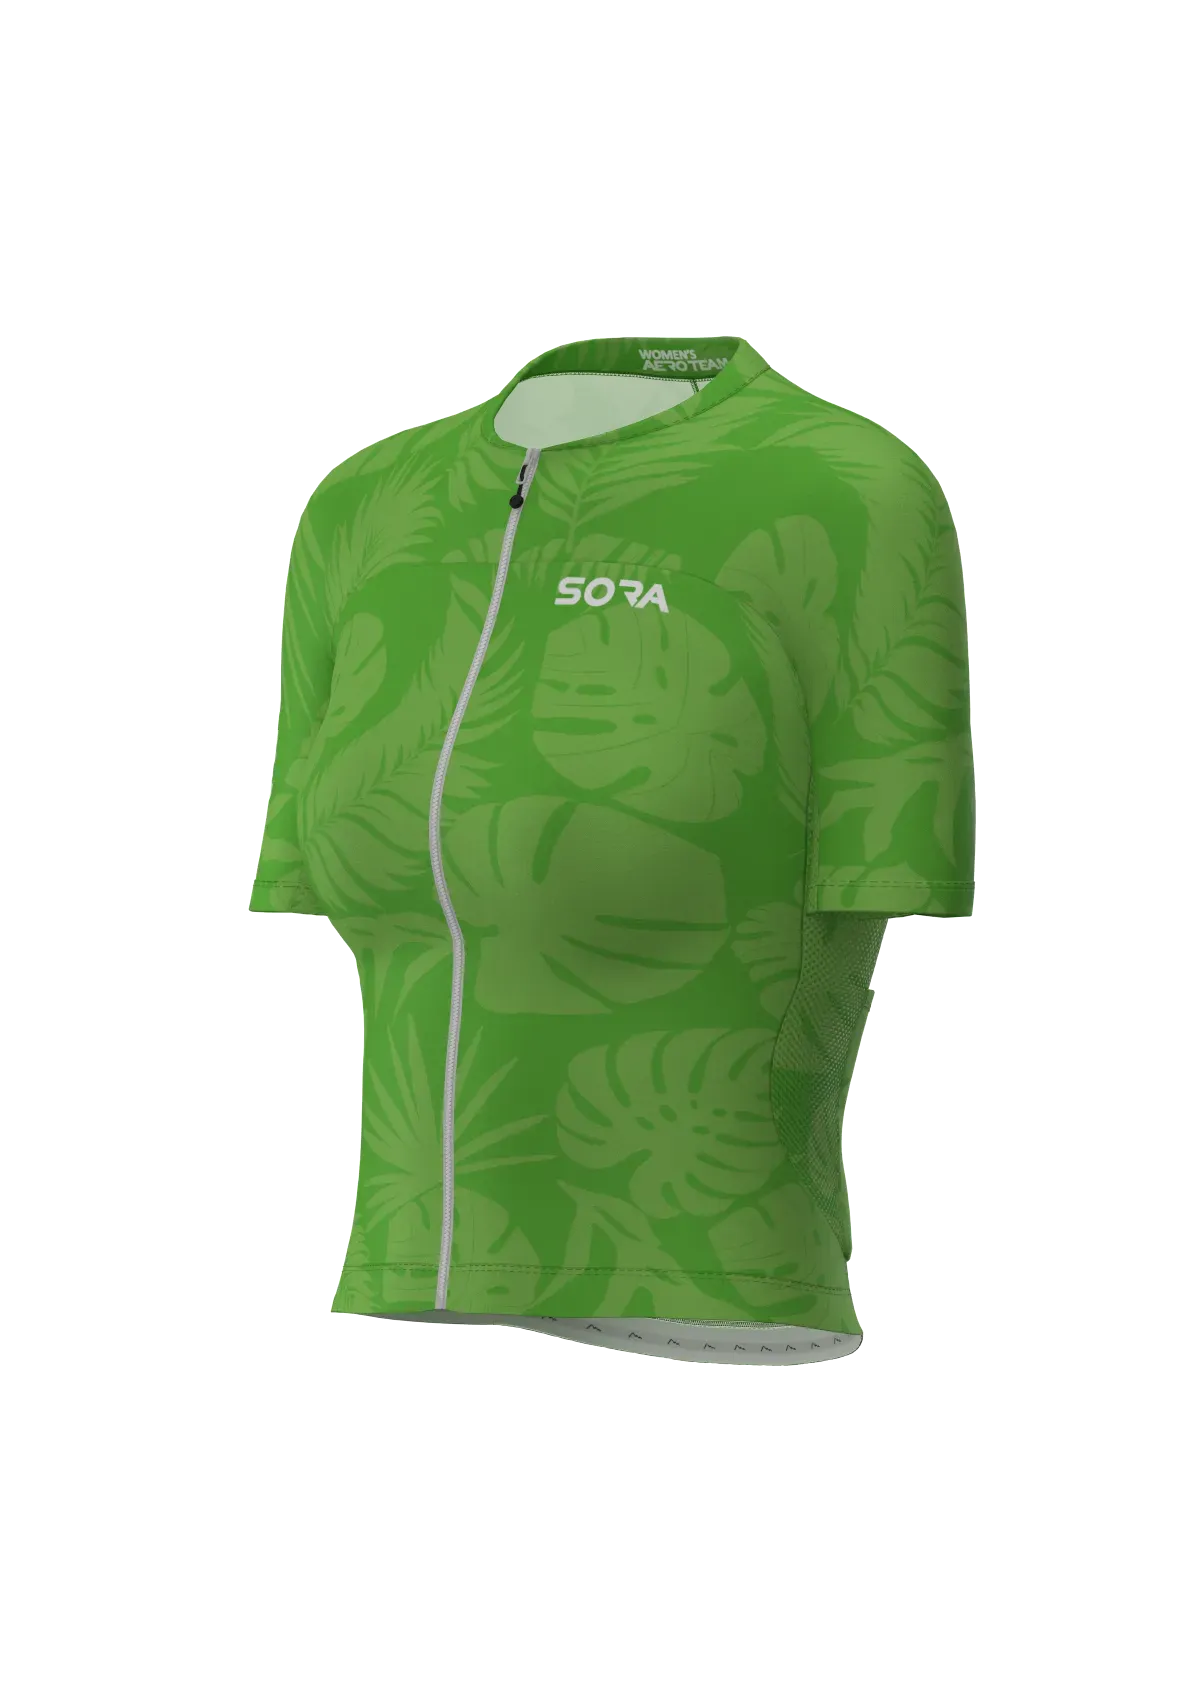 Green Aero Team Women's Cycling Jersey